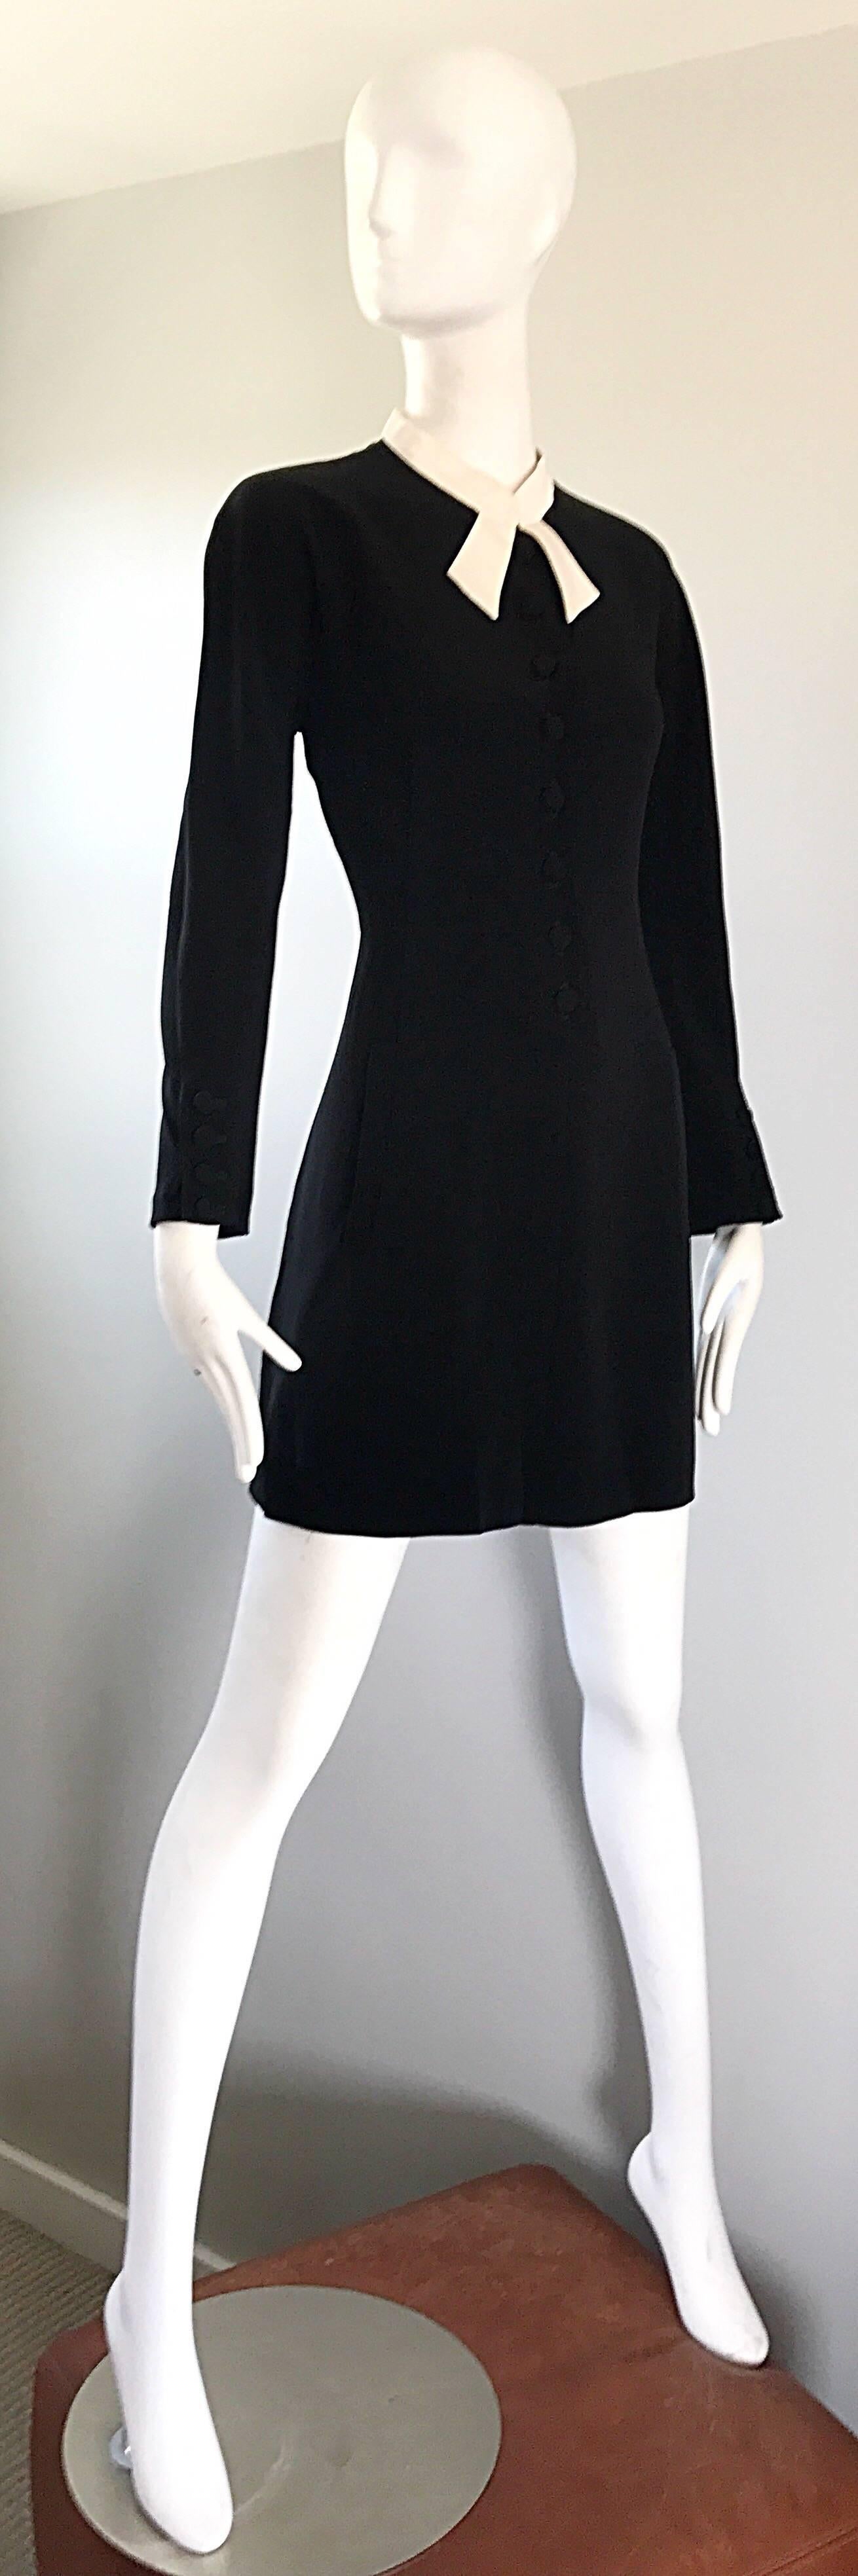 Women's Vintage Kritizia Black and White Long Sleeve Chic Tailored Tuxedo Dress 